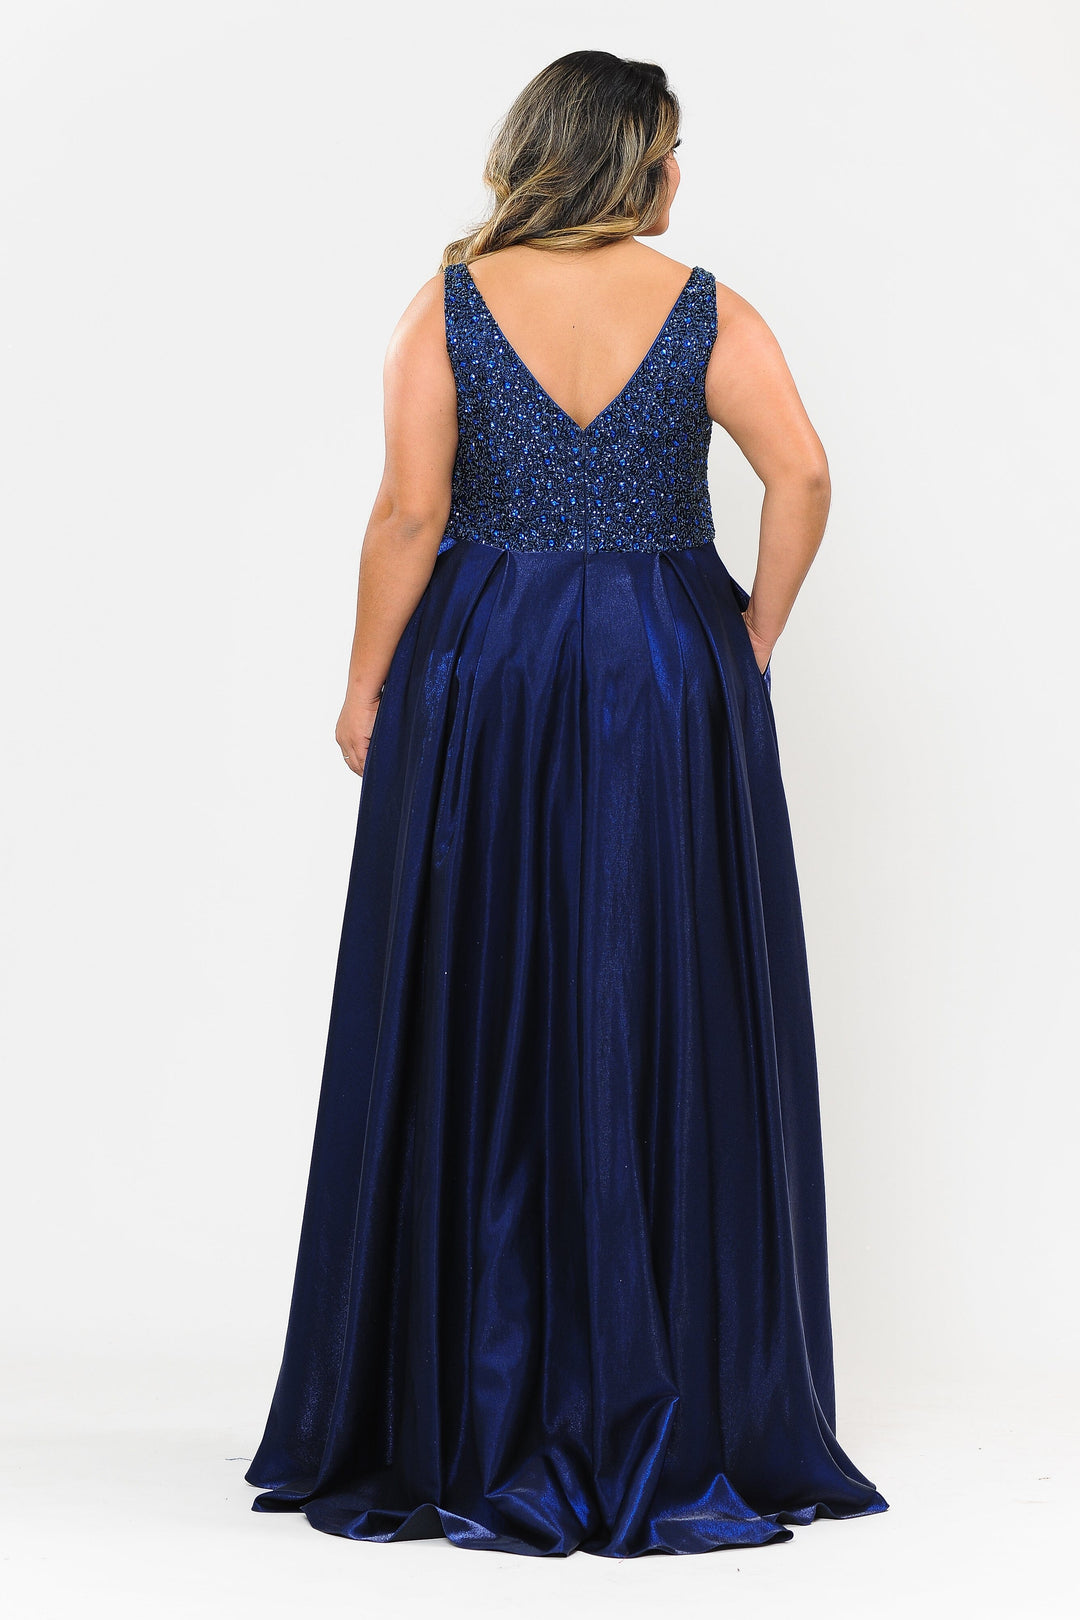 Plus Size Long Satin Dress with Beaded Bodice by Poly USA W1066